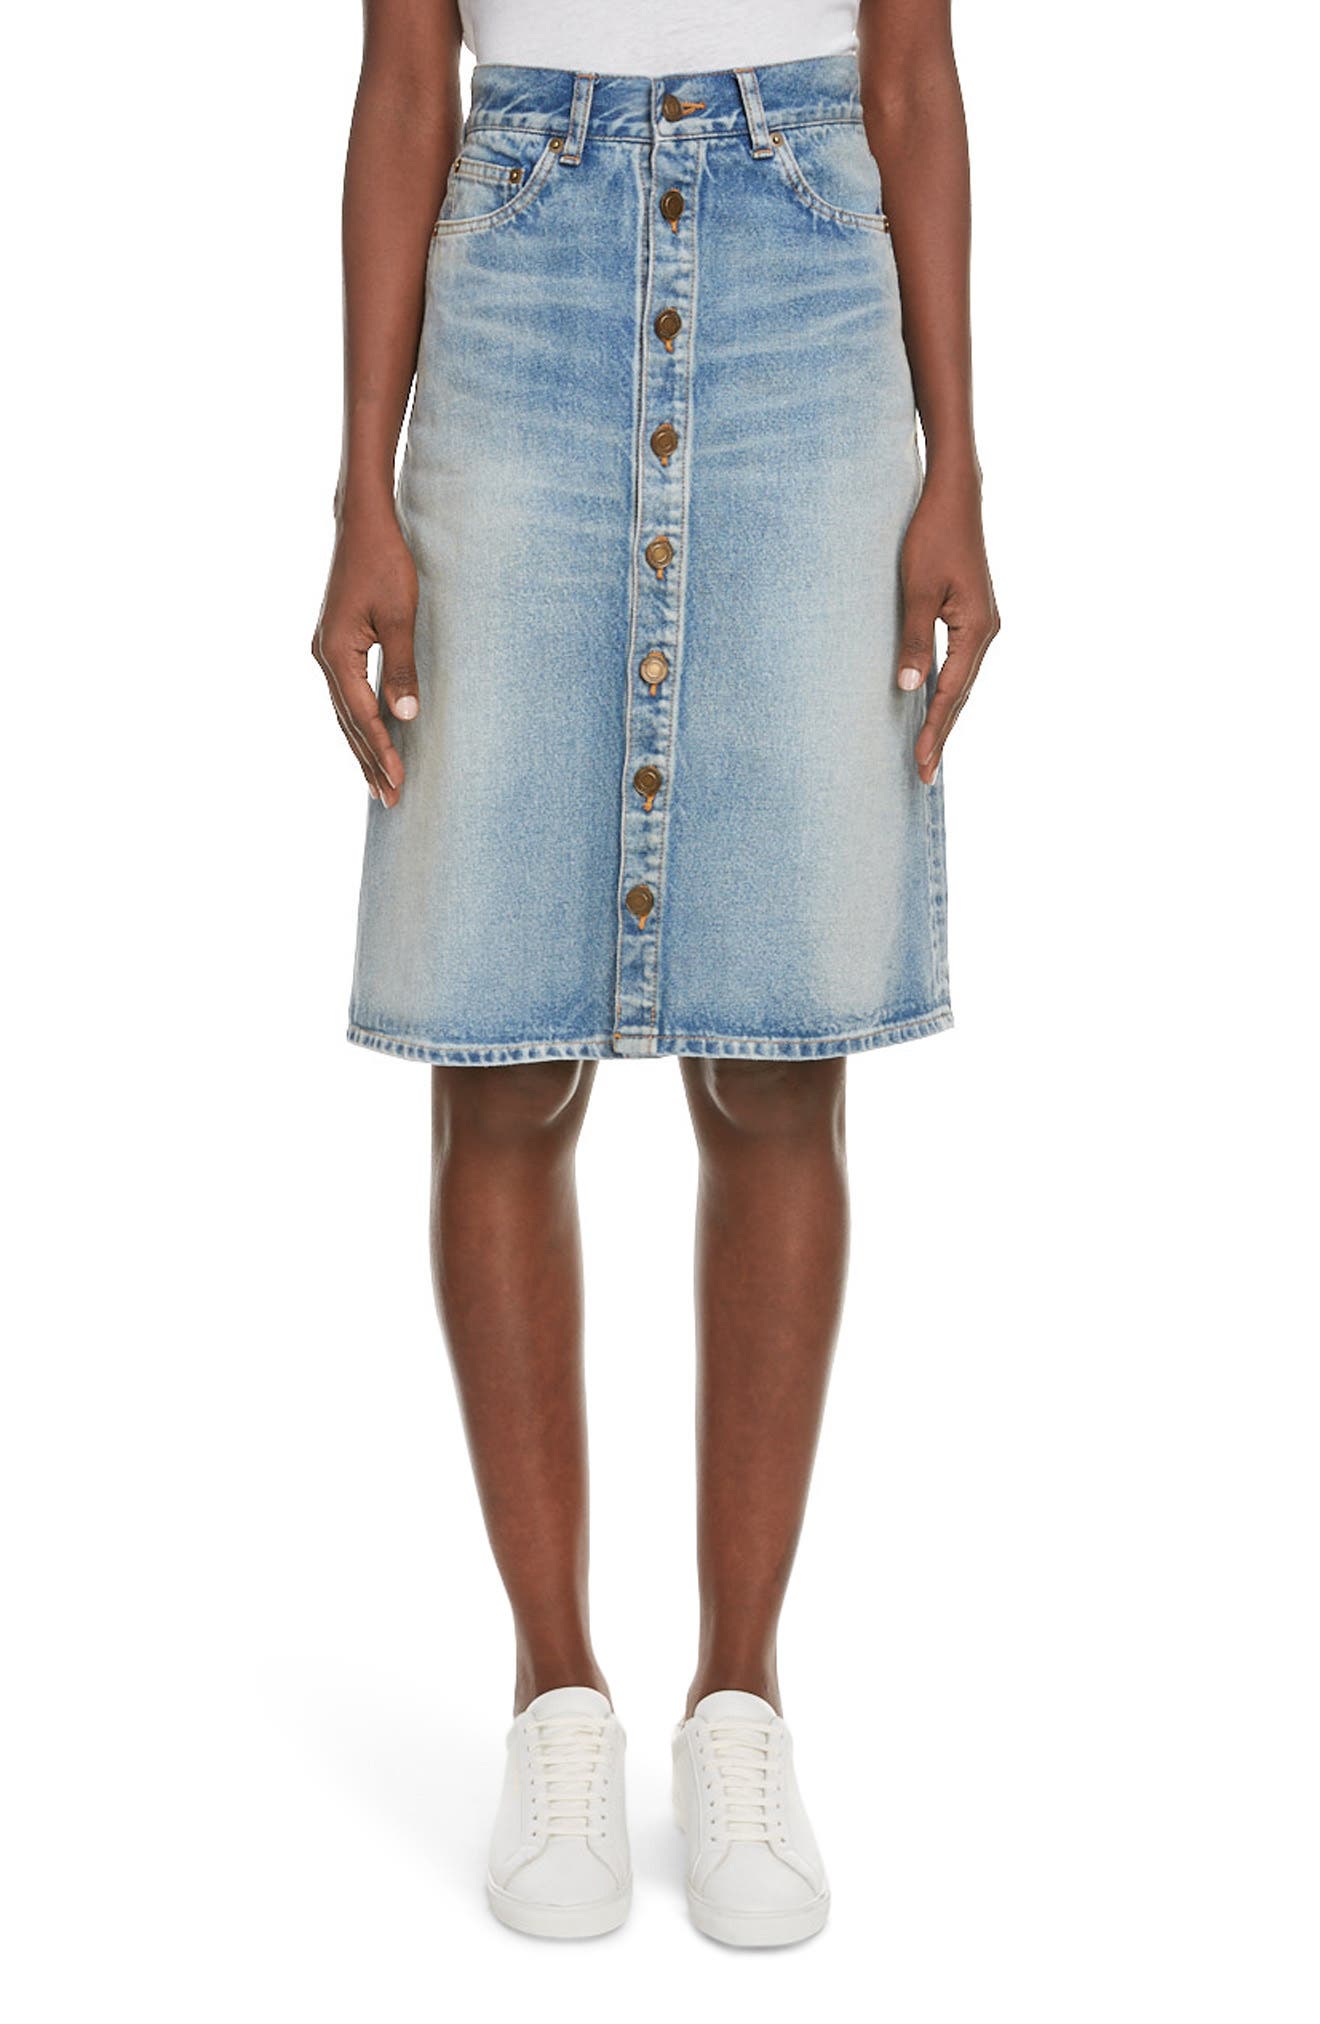 knee length denim skirt with buttons